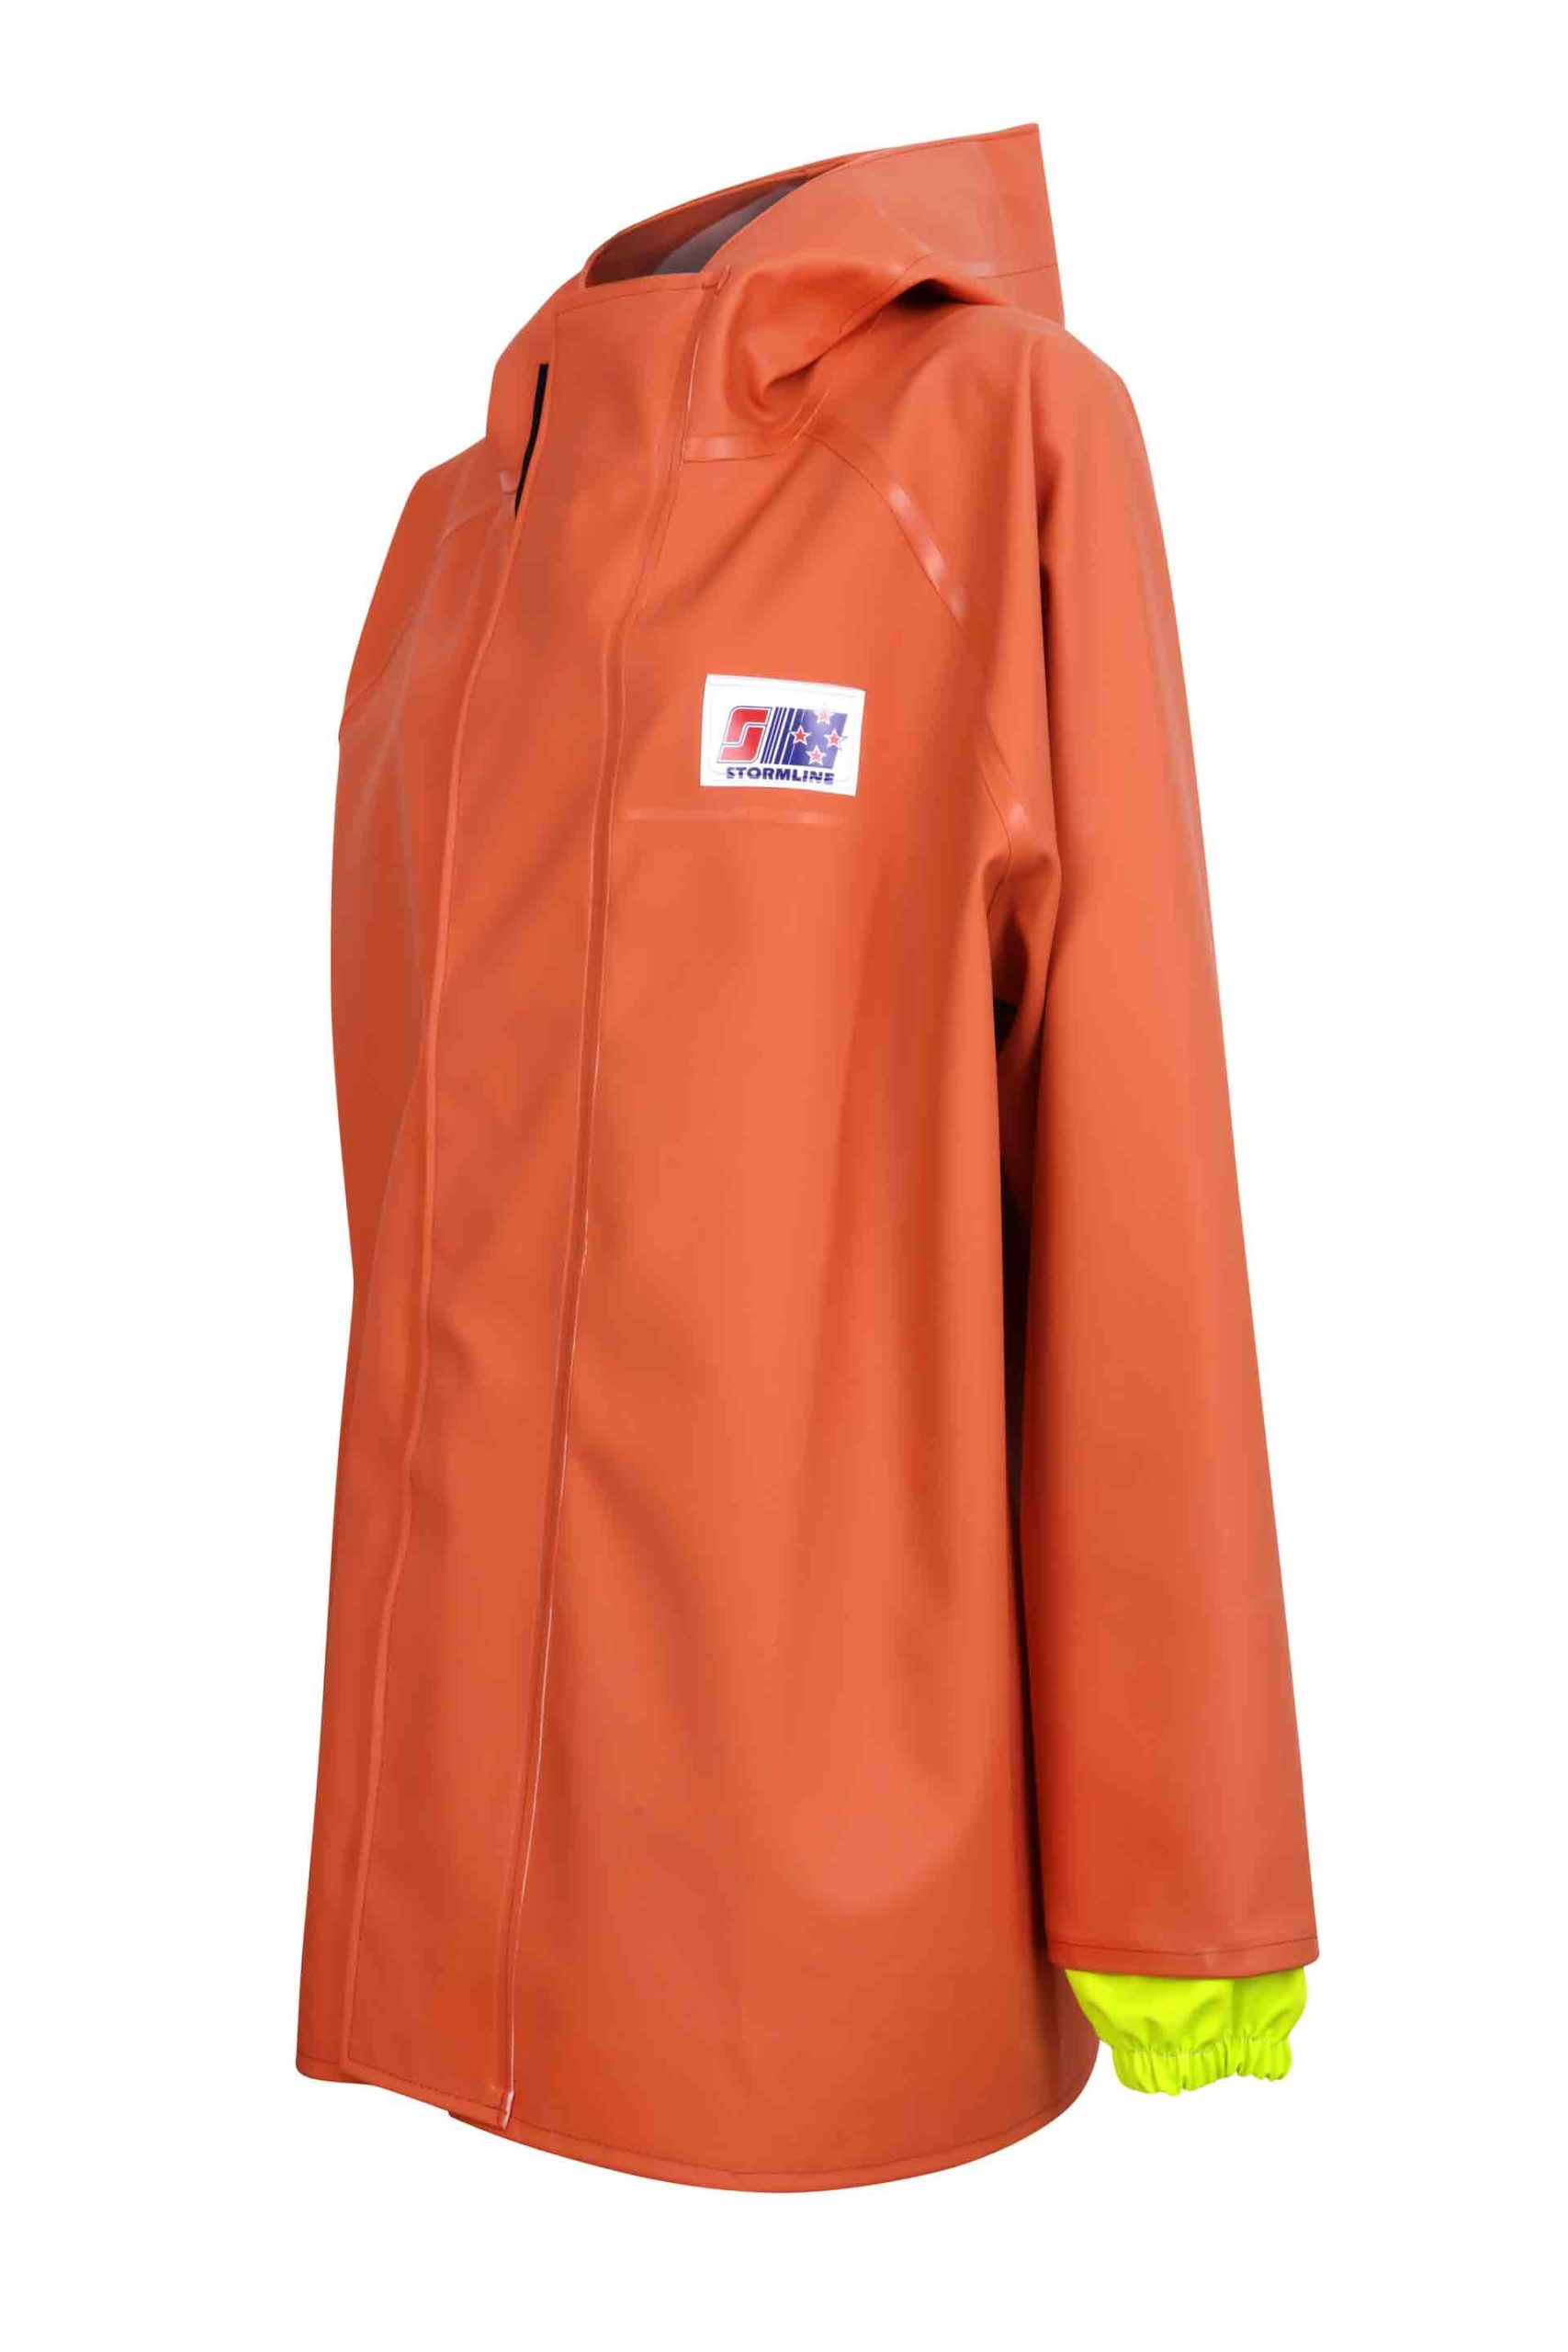 Stormline Lightweight Commercial Fishing Rain Gear Jacket Pick Size Free Ship* 